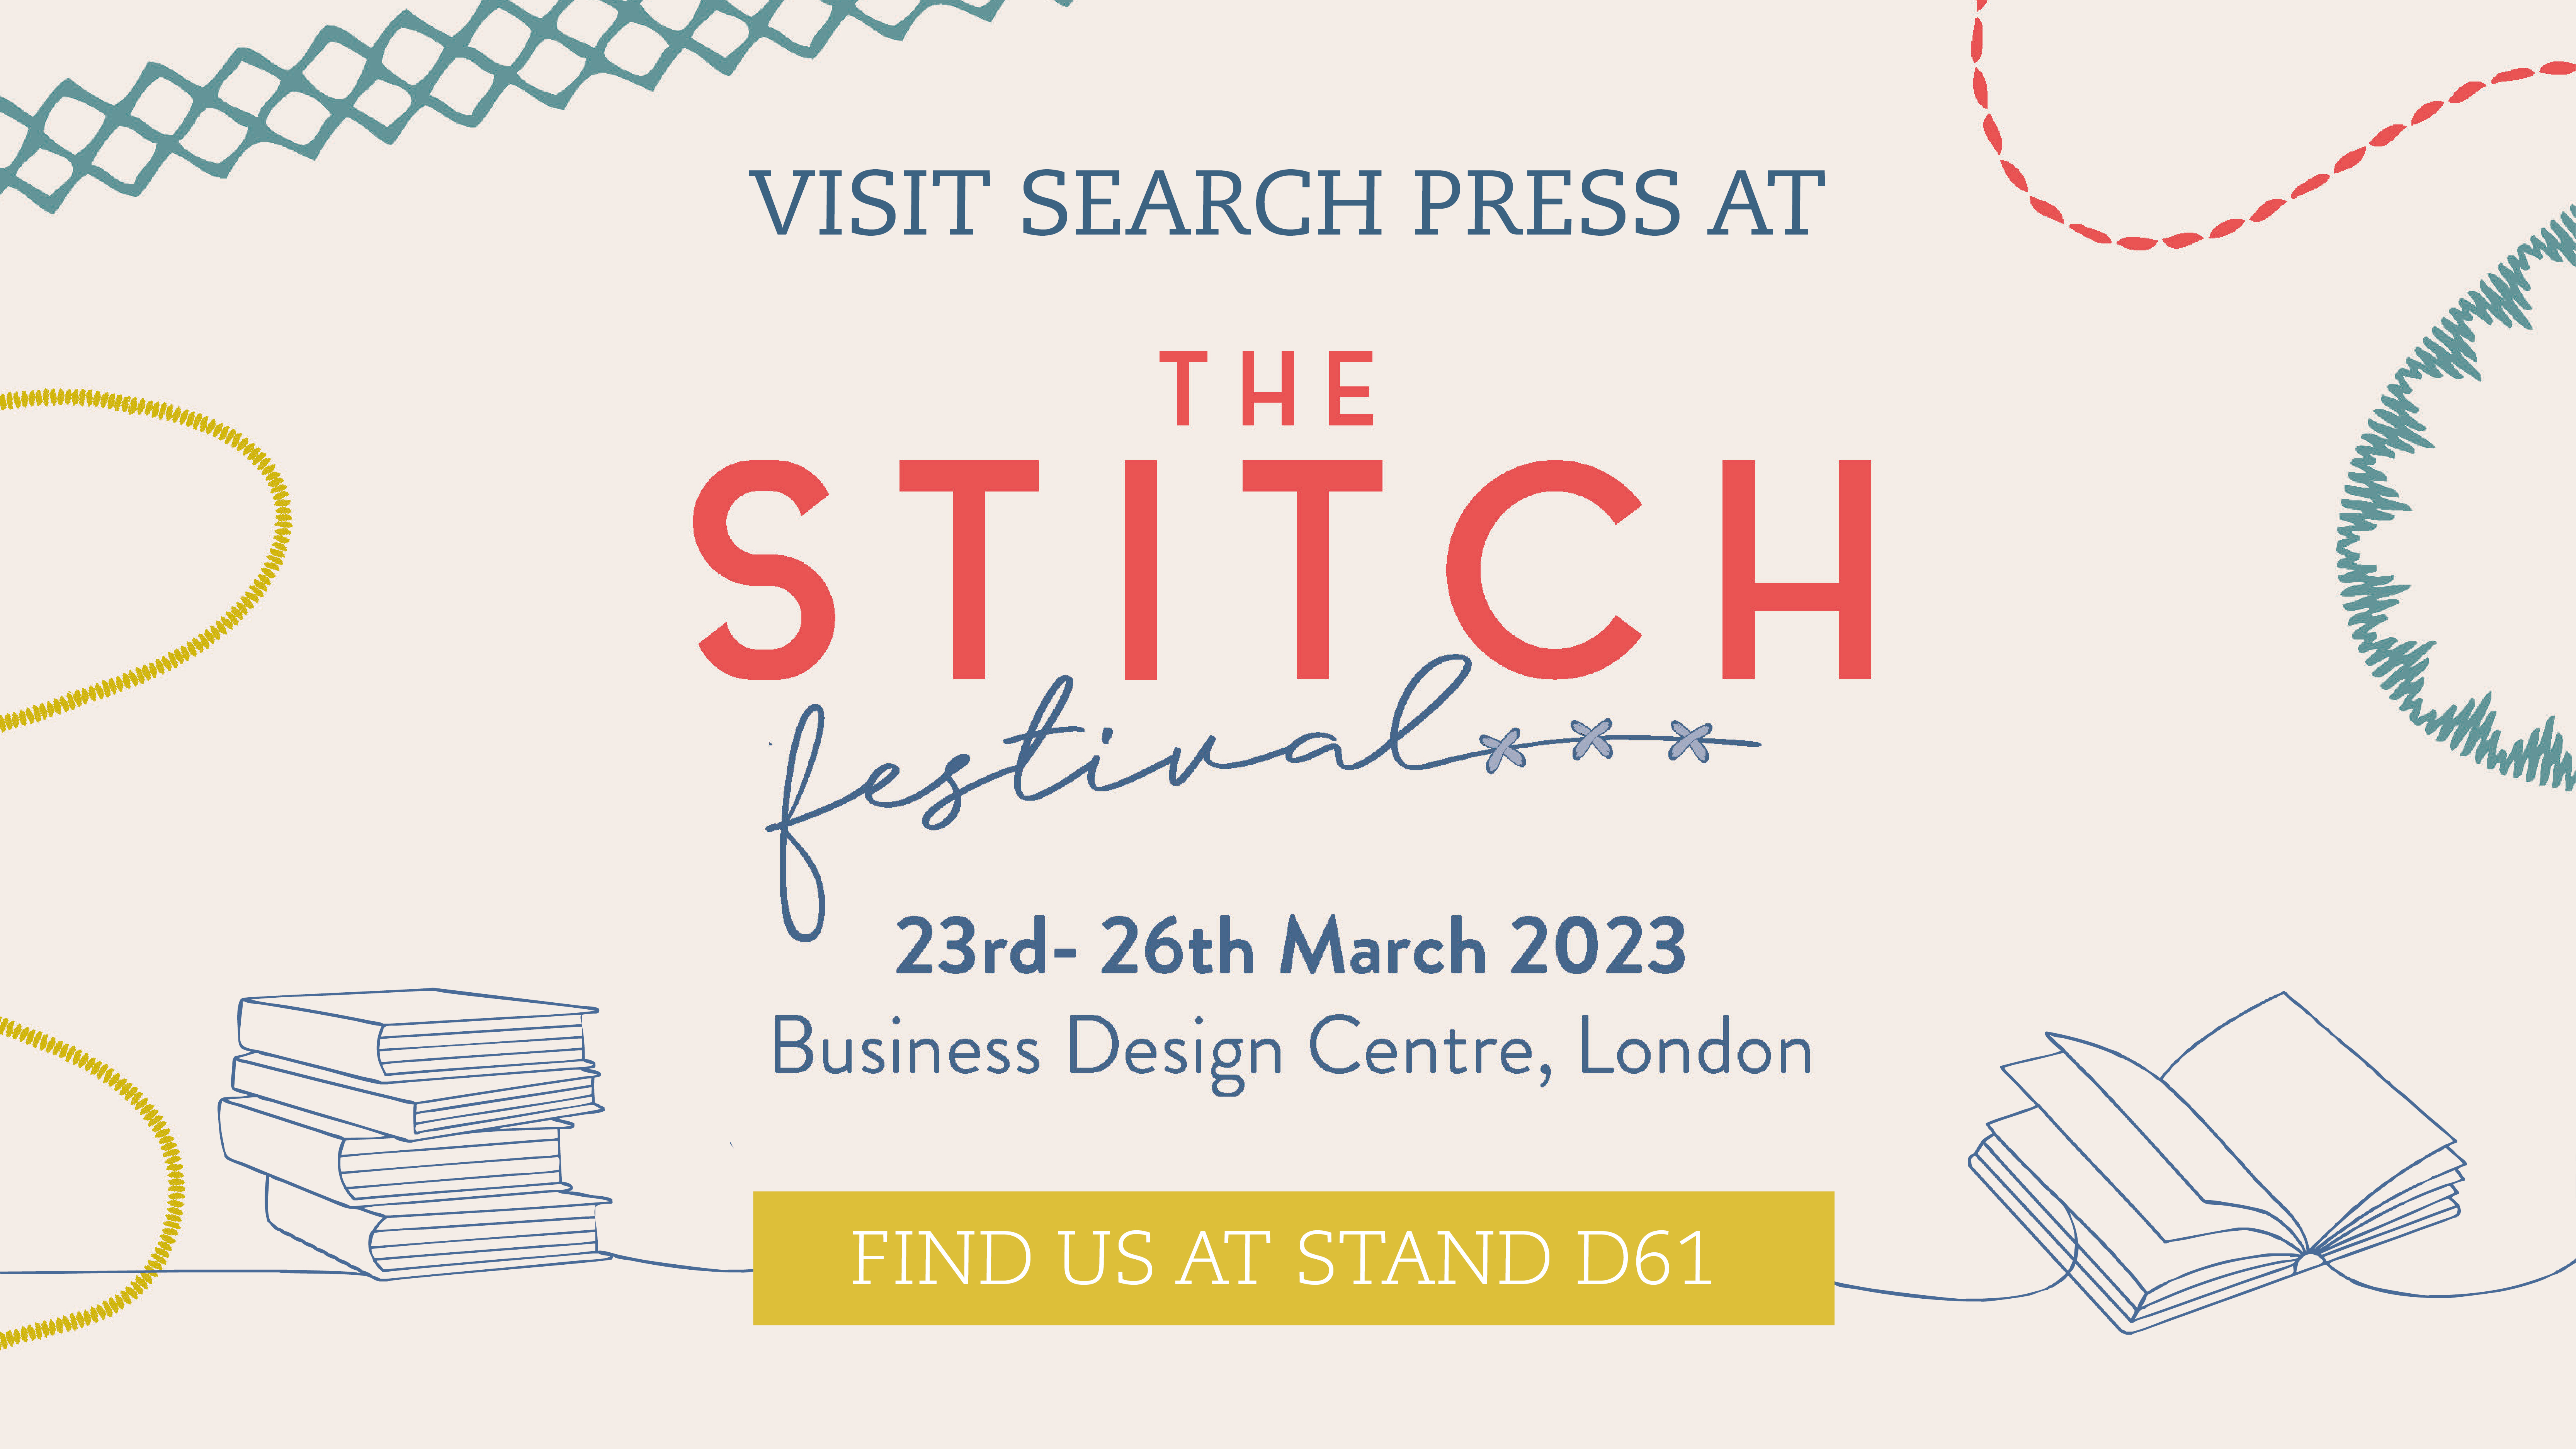 The Stitch Festival 2023 - Business Design Centre, London